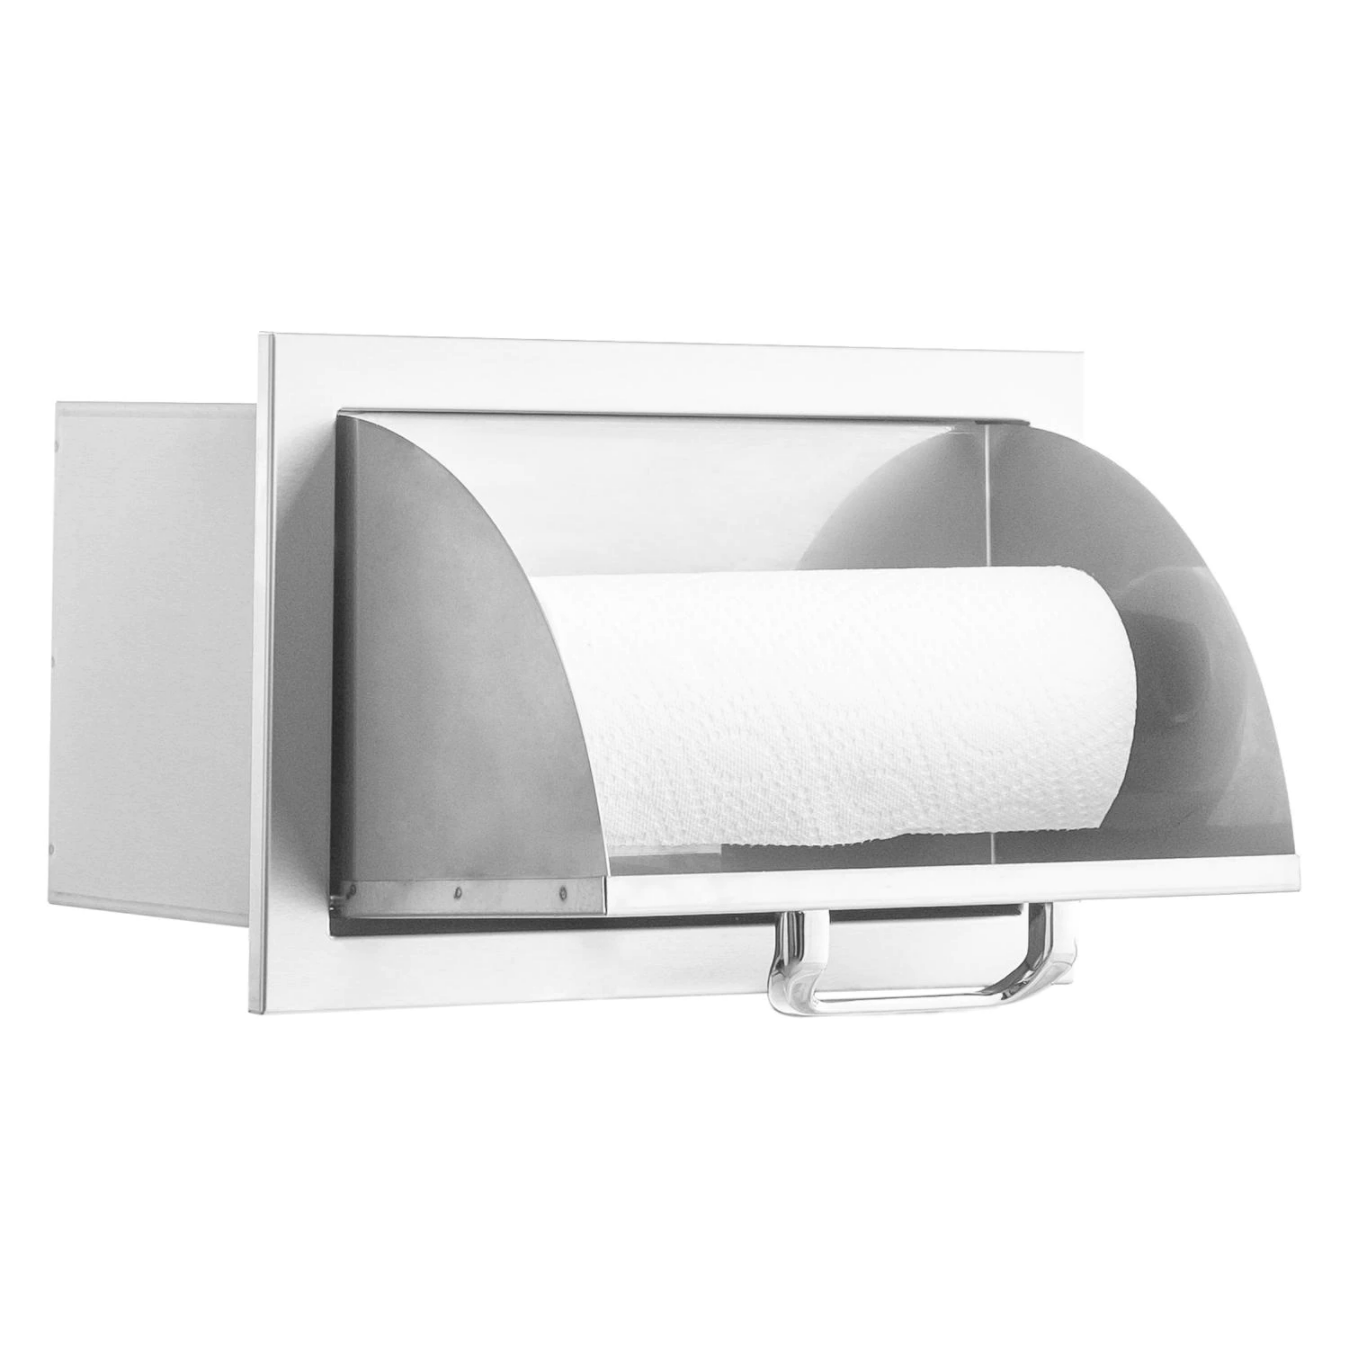 PCM 260 Series 16" Stainless Steel Paper Towel Holder